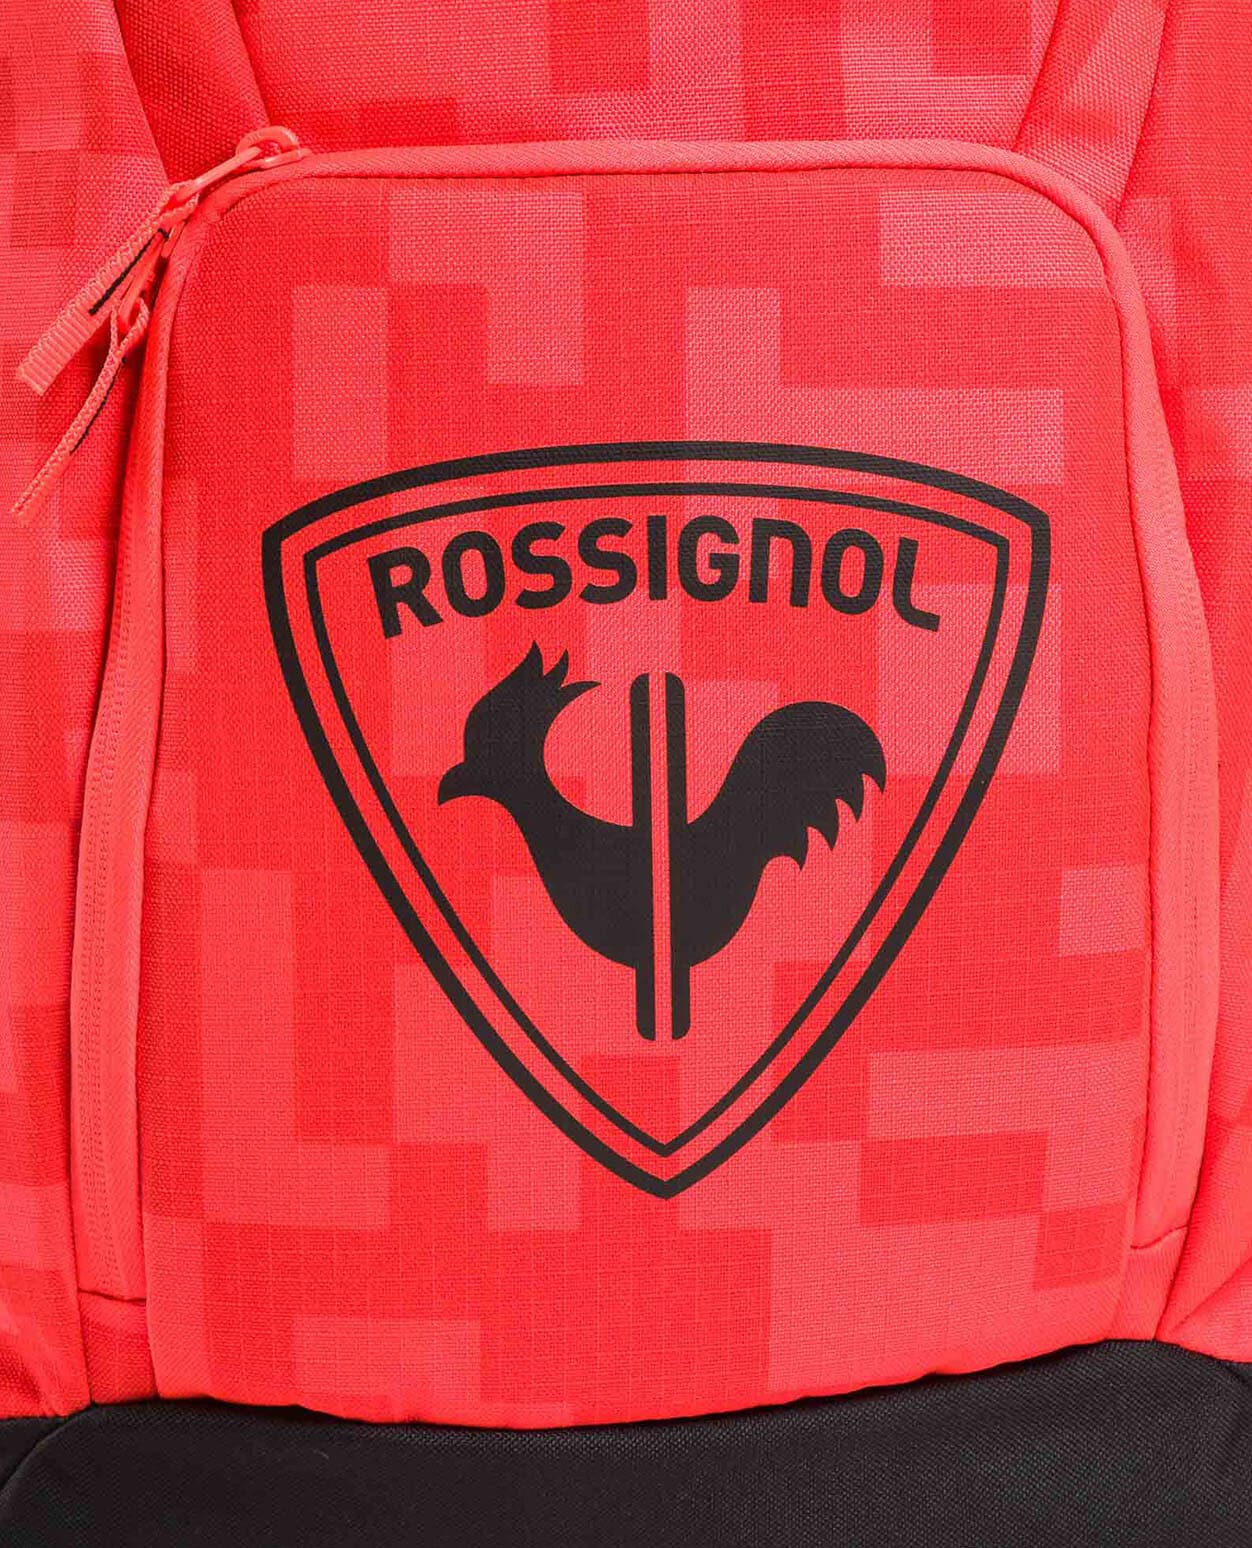 Rossignol Small Athletes Bag